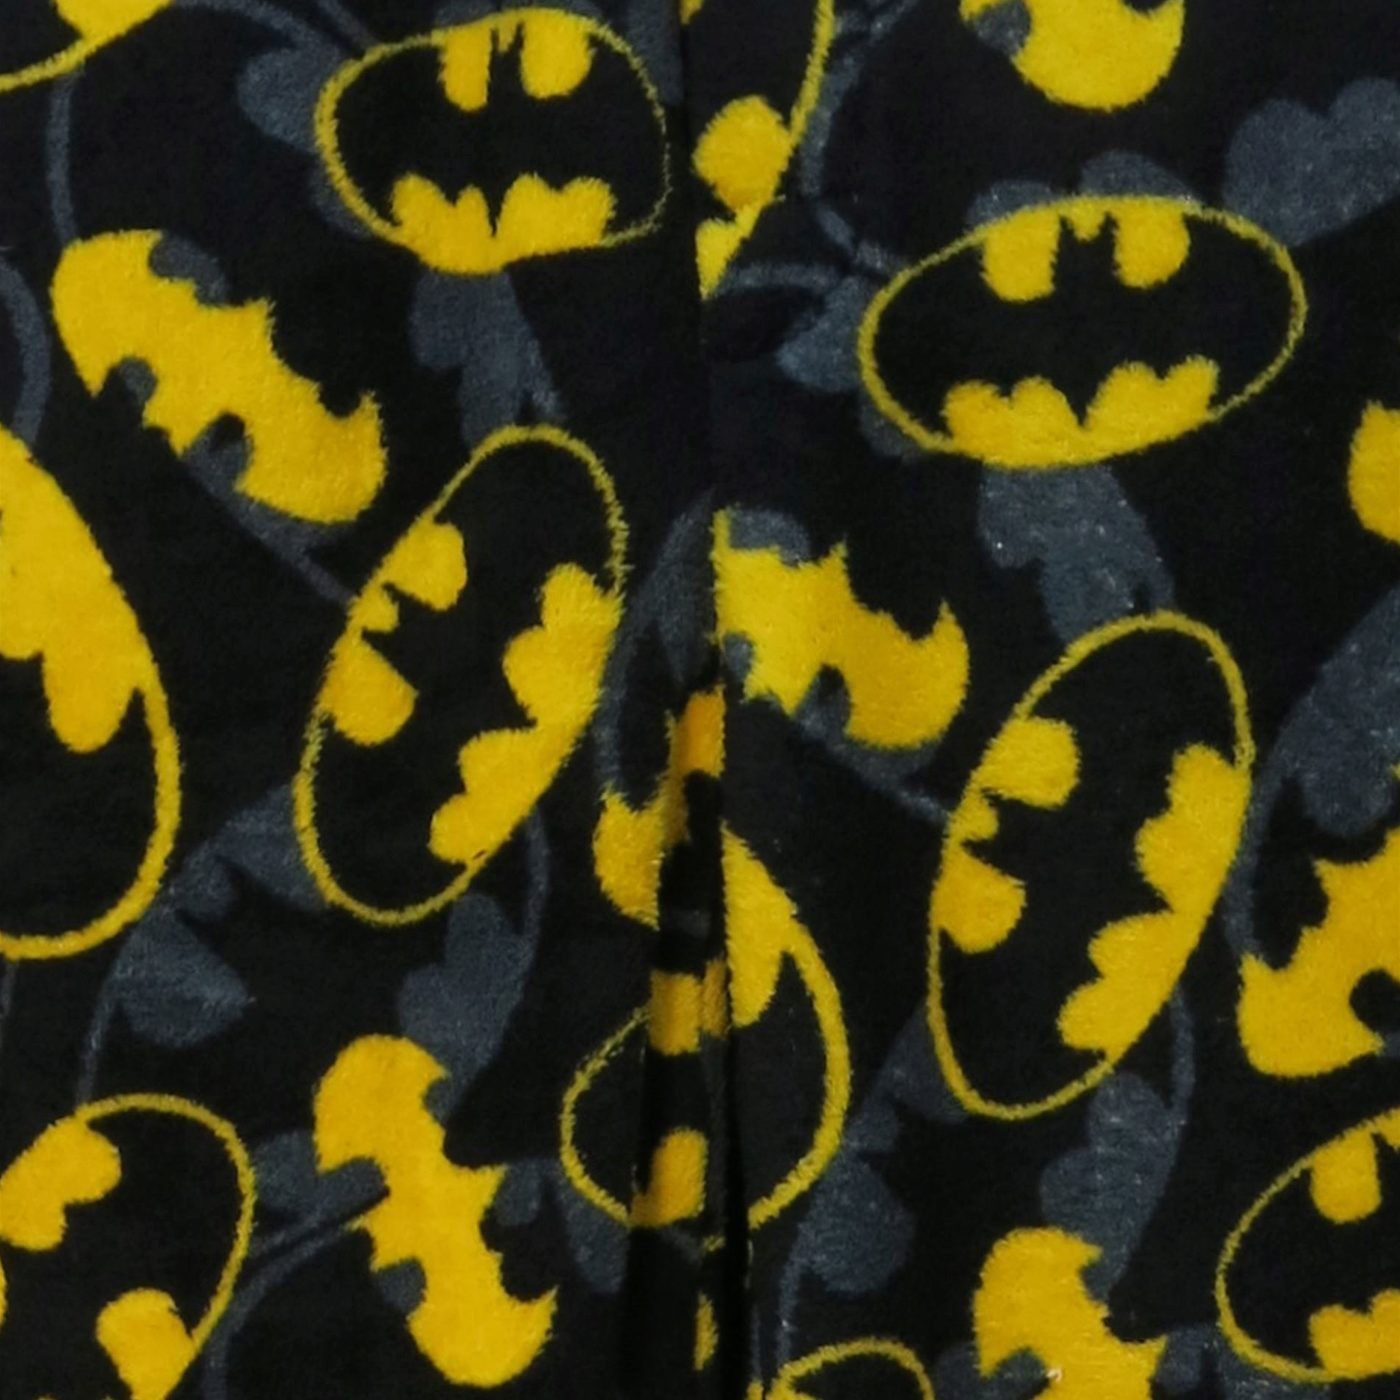 Batman Multi-Symbols Men's Poly Fleece Sleep Pants